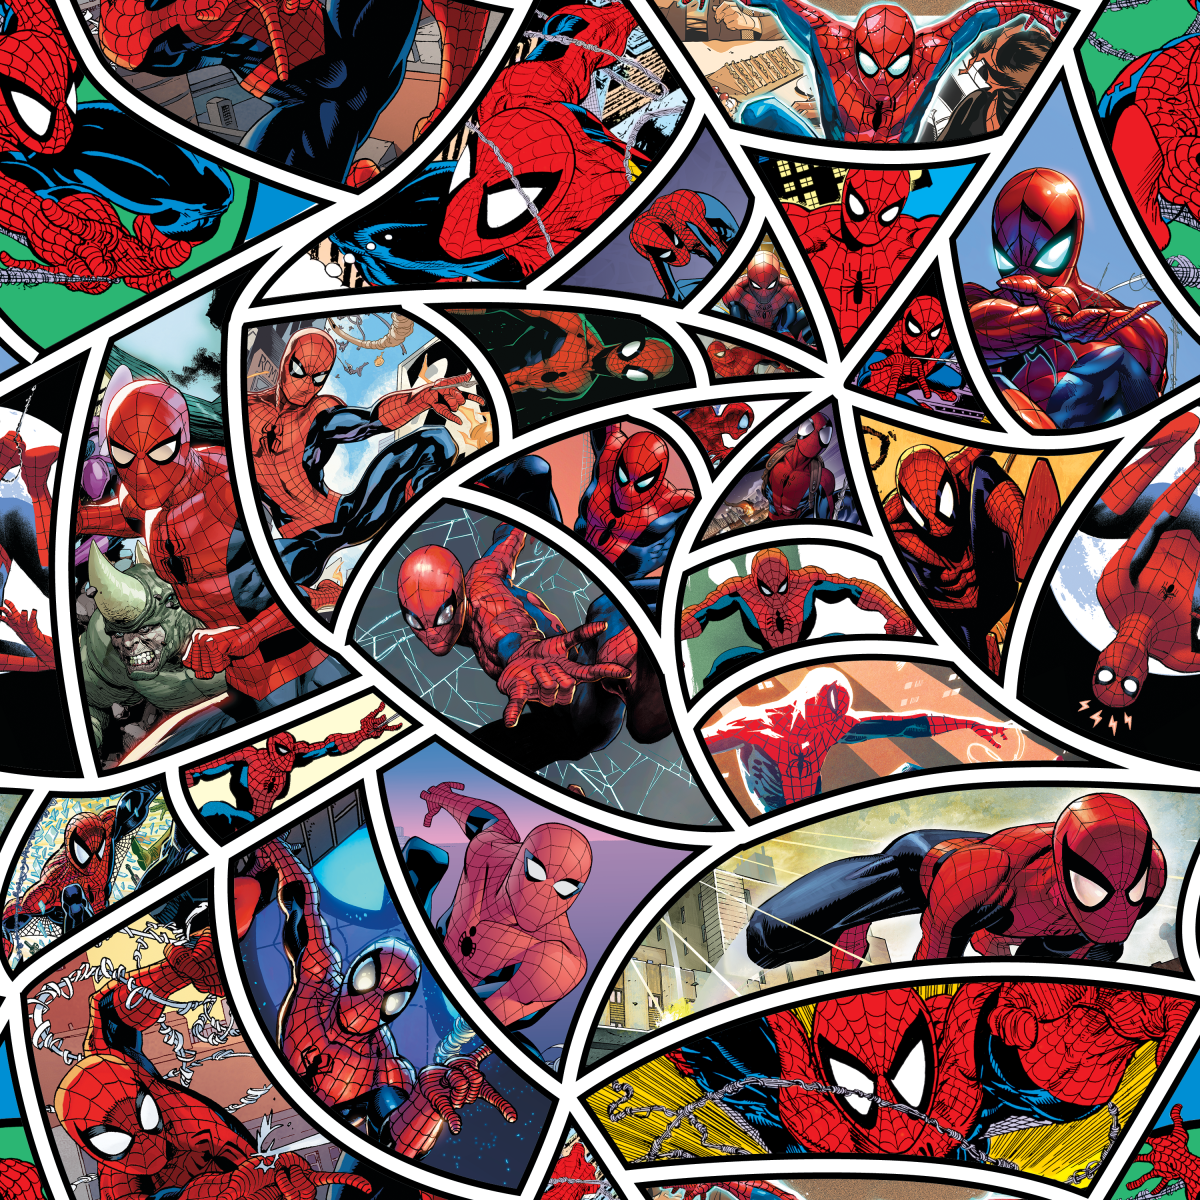 Spider-Man art for "Spider-Man: Beyond Amazing" Comic-Con Museum exhibit.